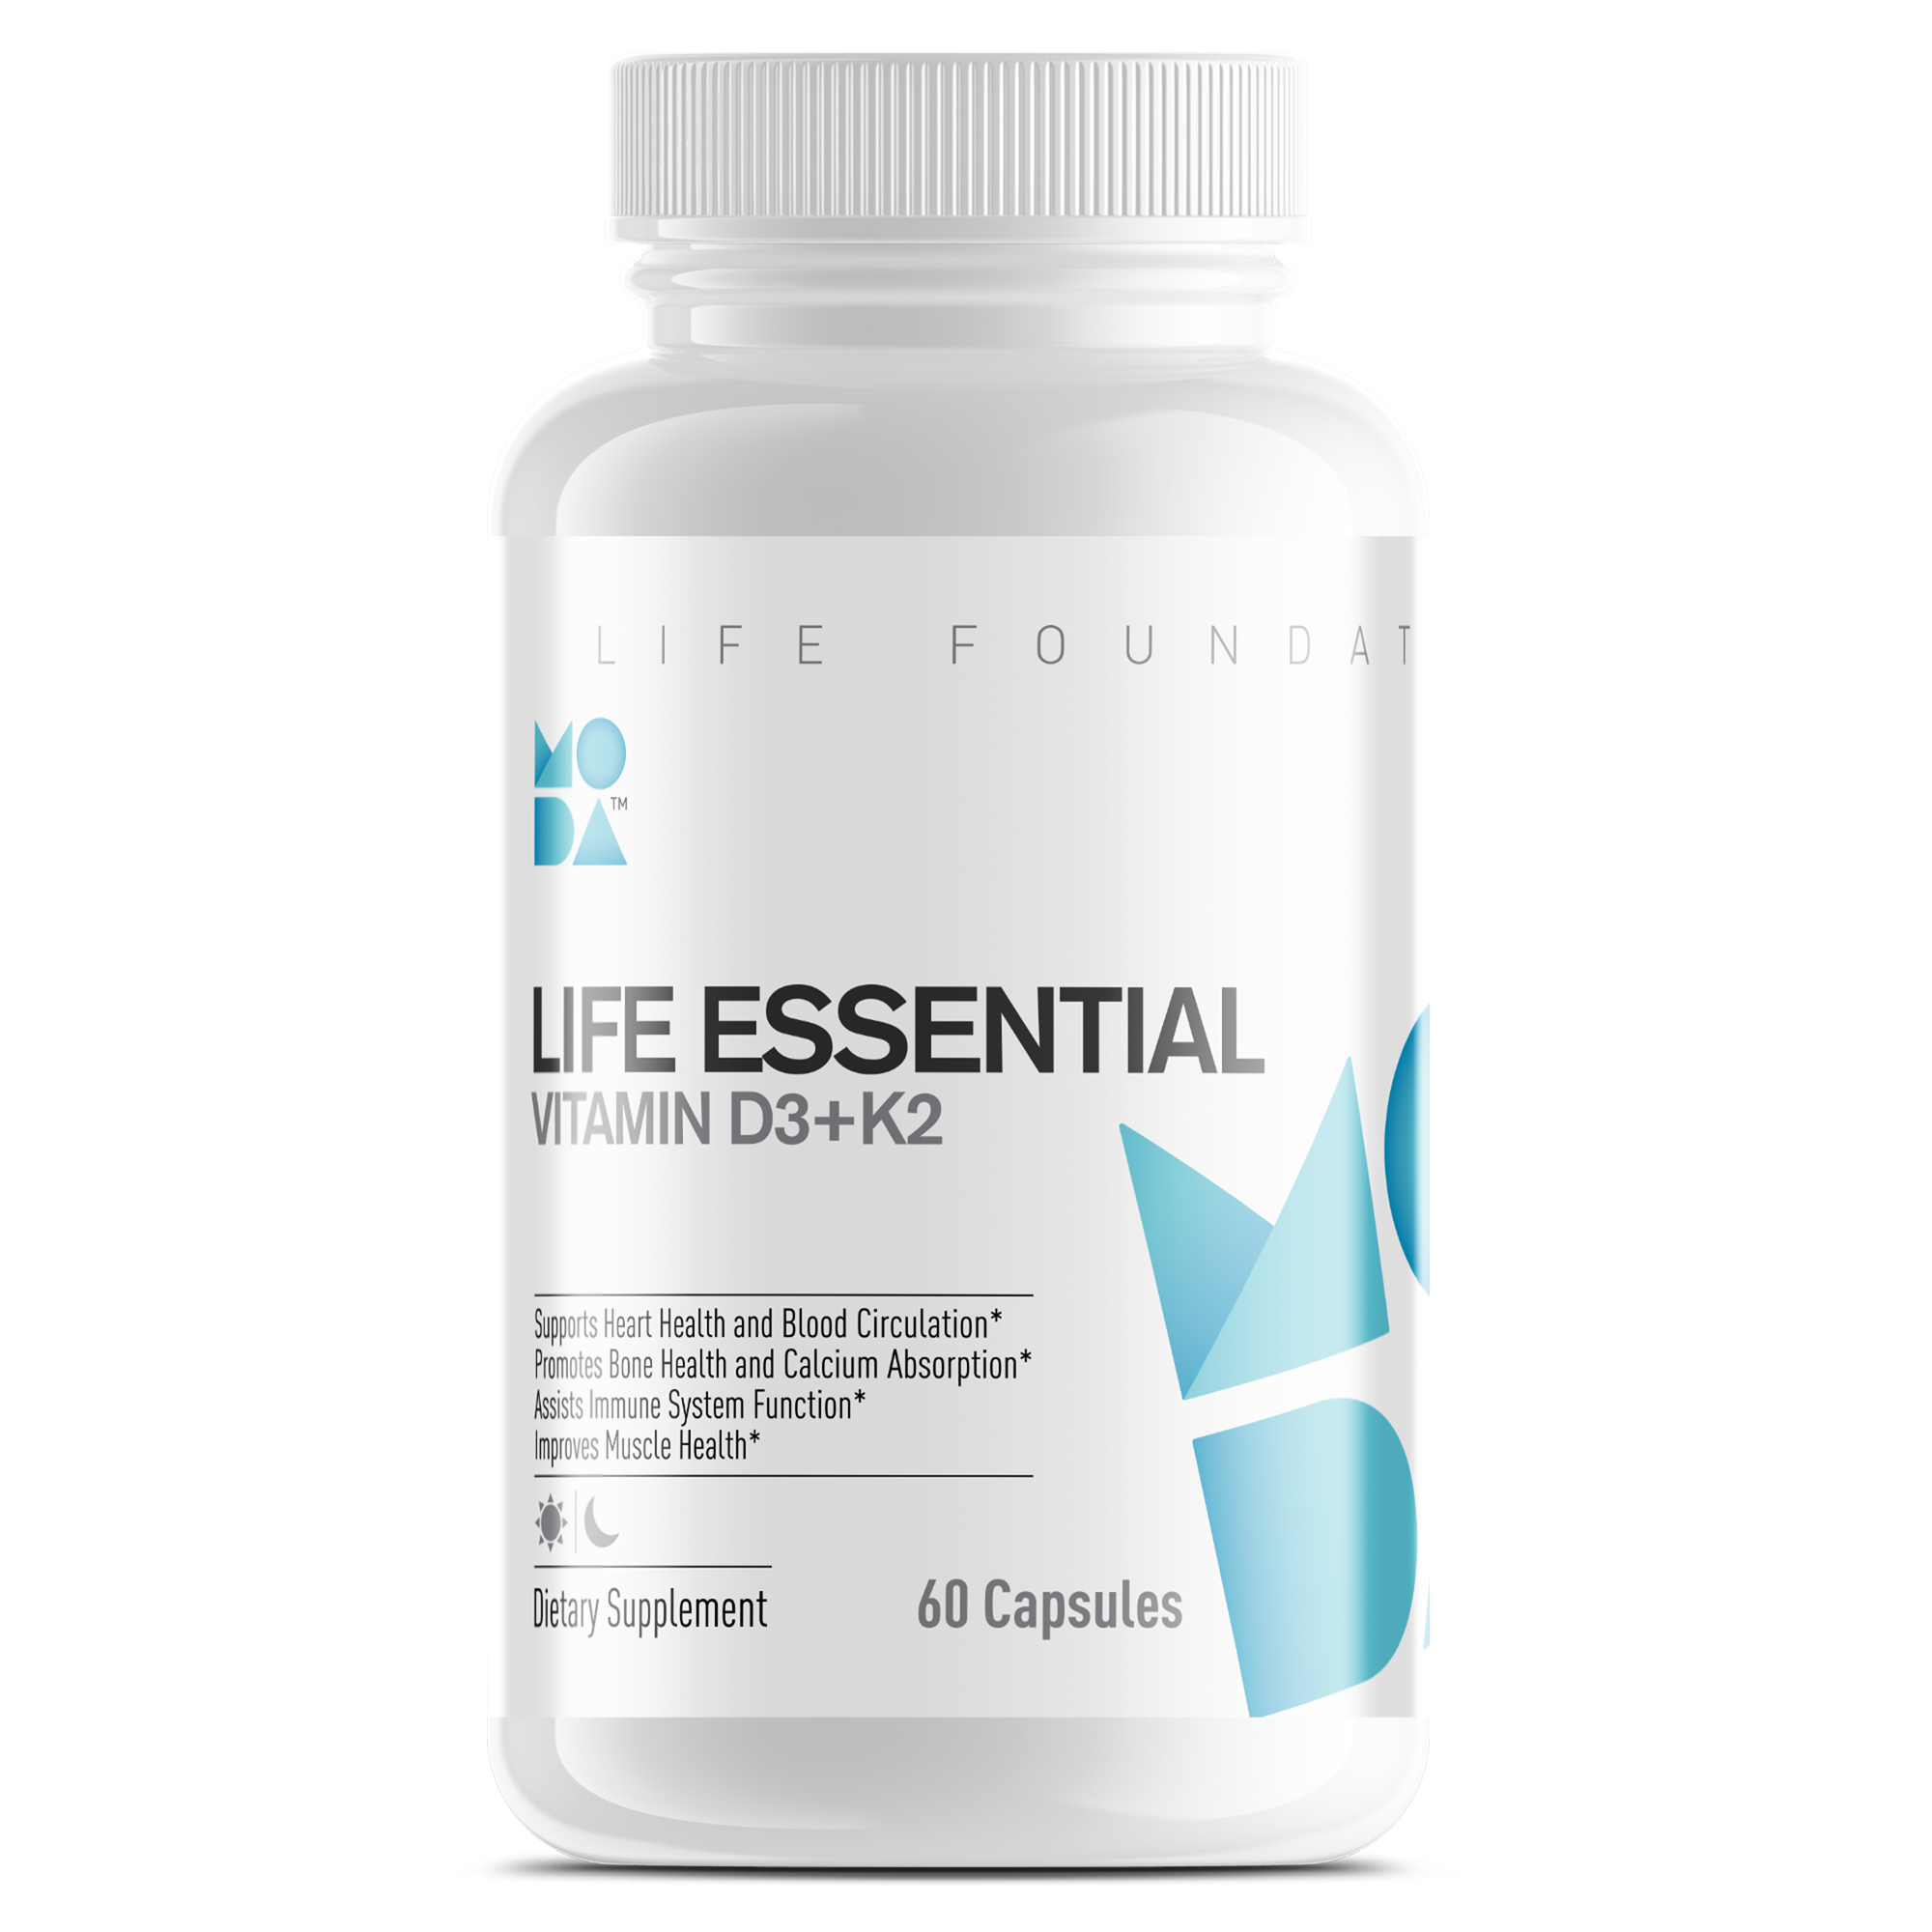 LIFE ESSENTIAL (Vitamin D3+K2 - NSF Certified)